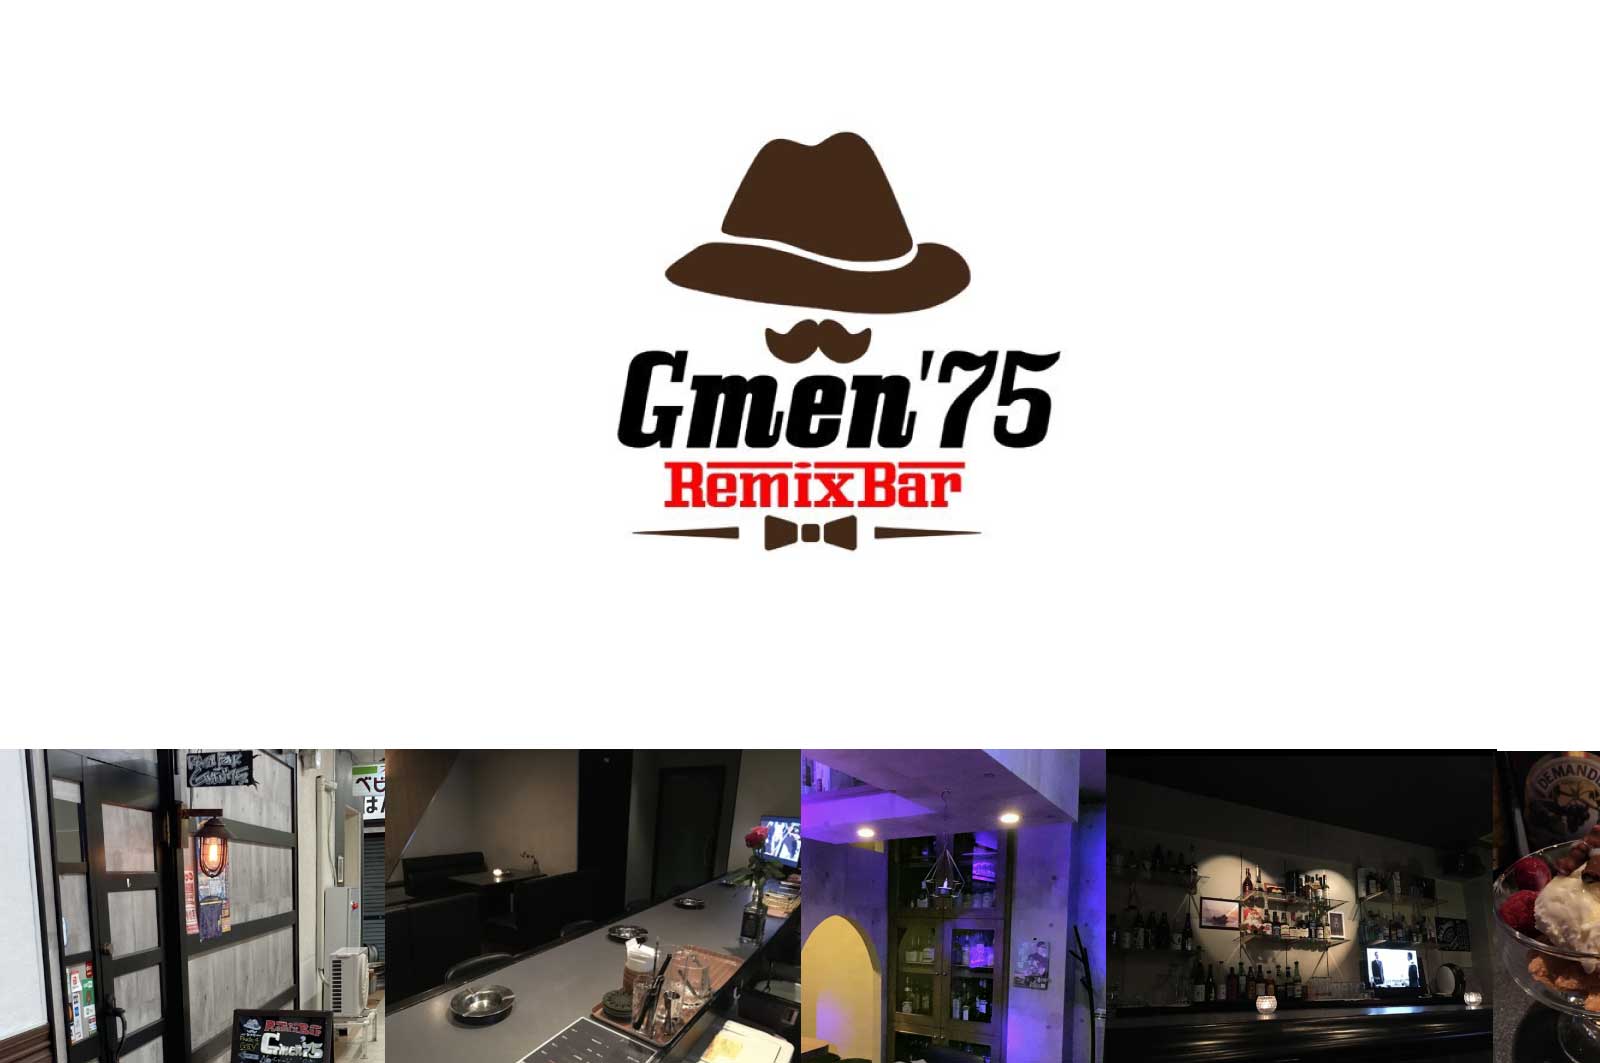 Remix Bar Gmen'75